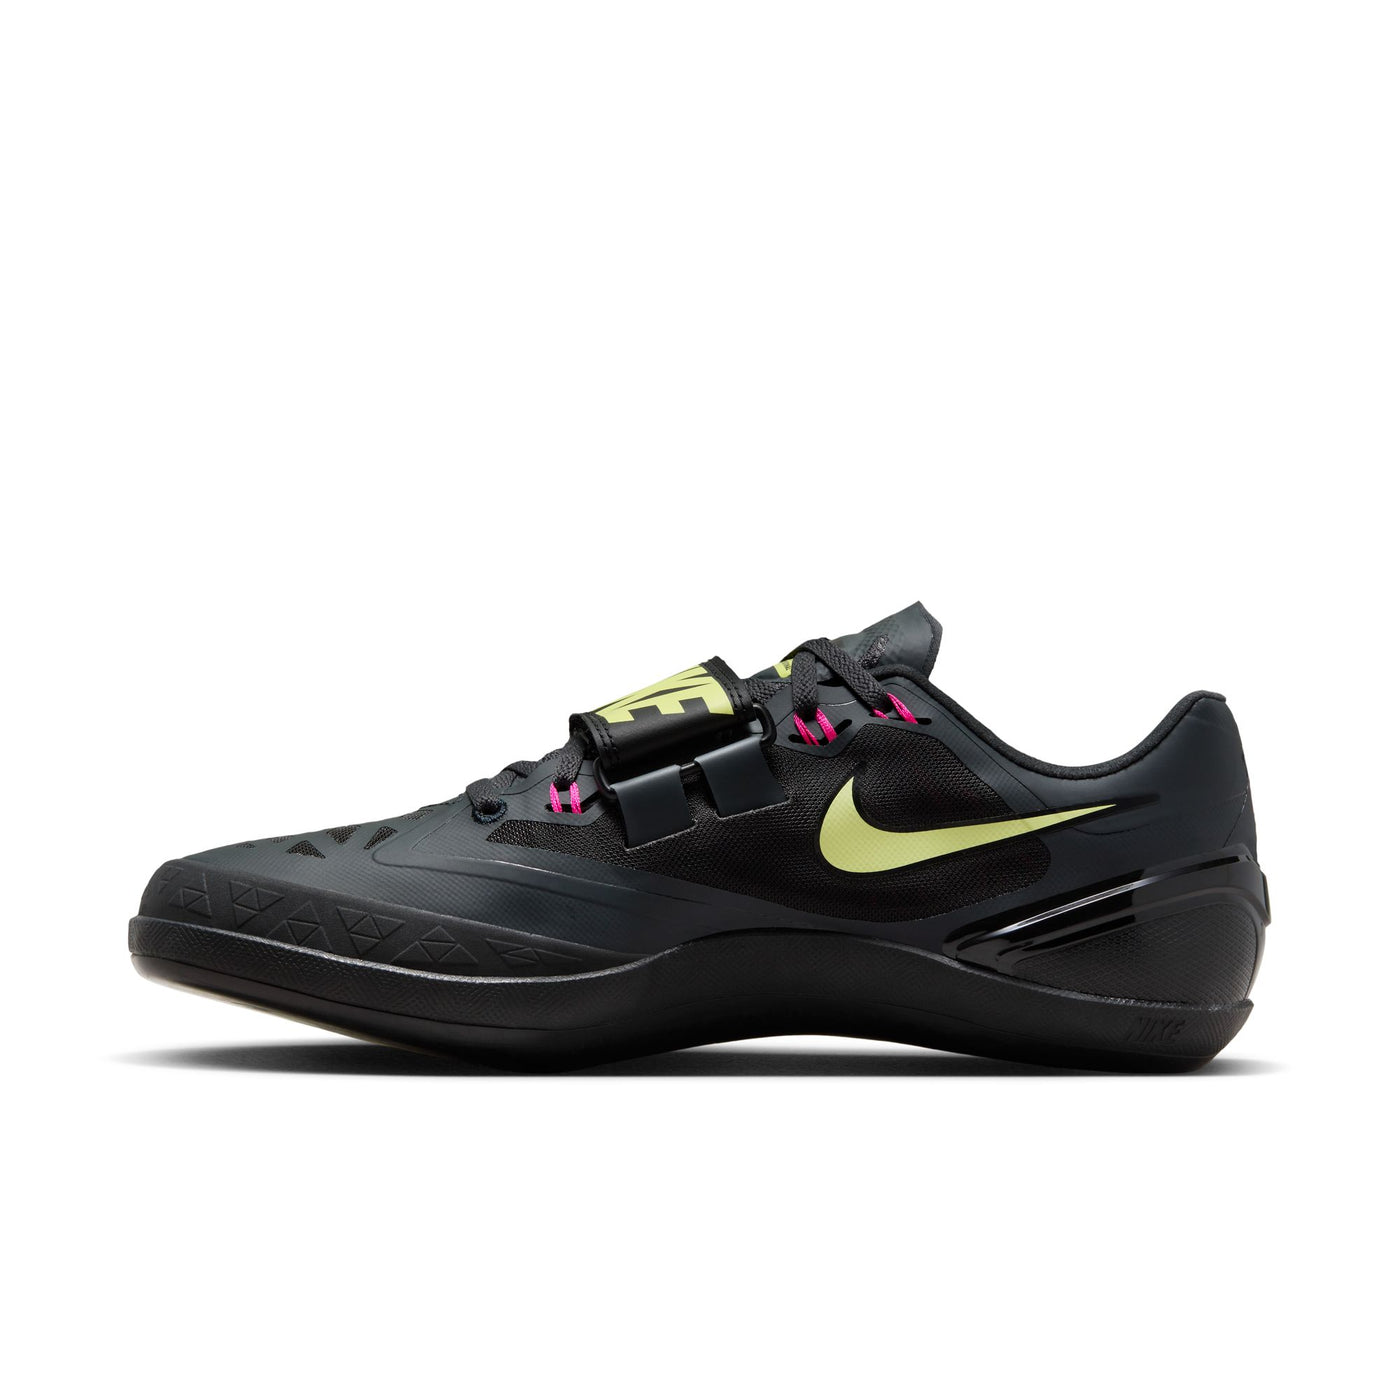 Unisex Nike Zoom Rotational 6 Throwing Shoe - 685131-004